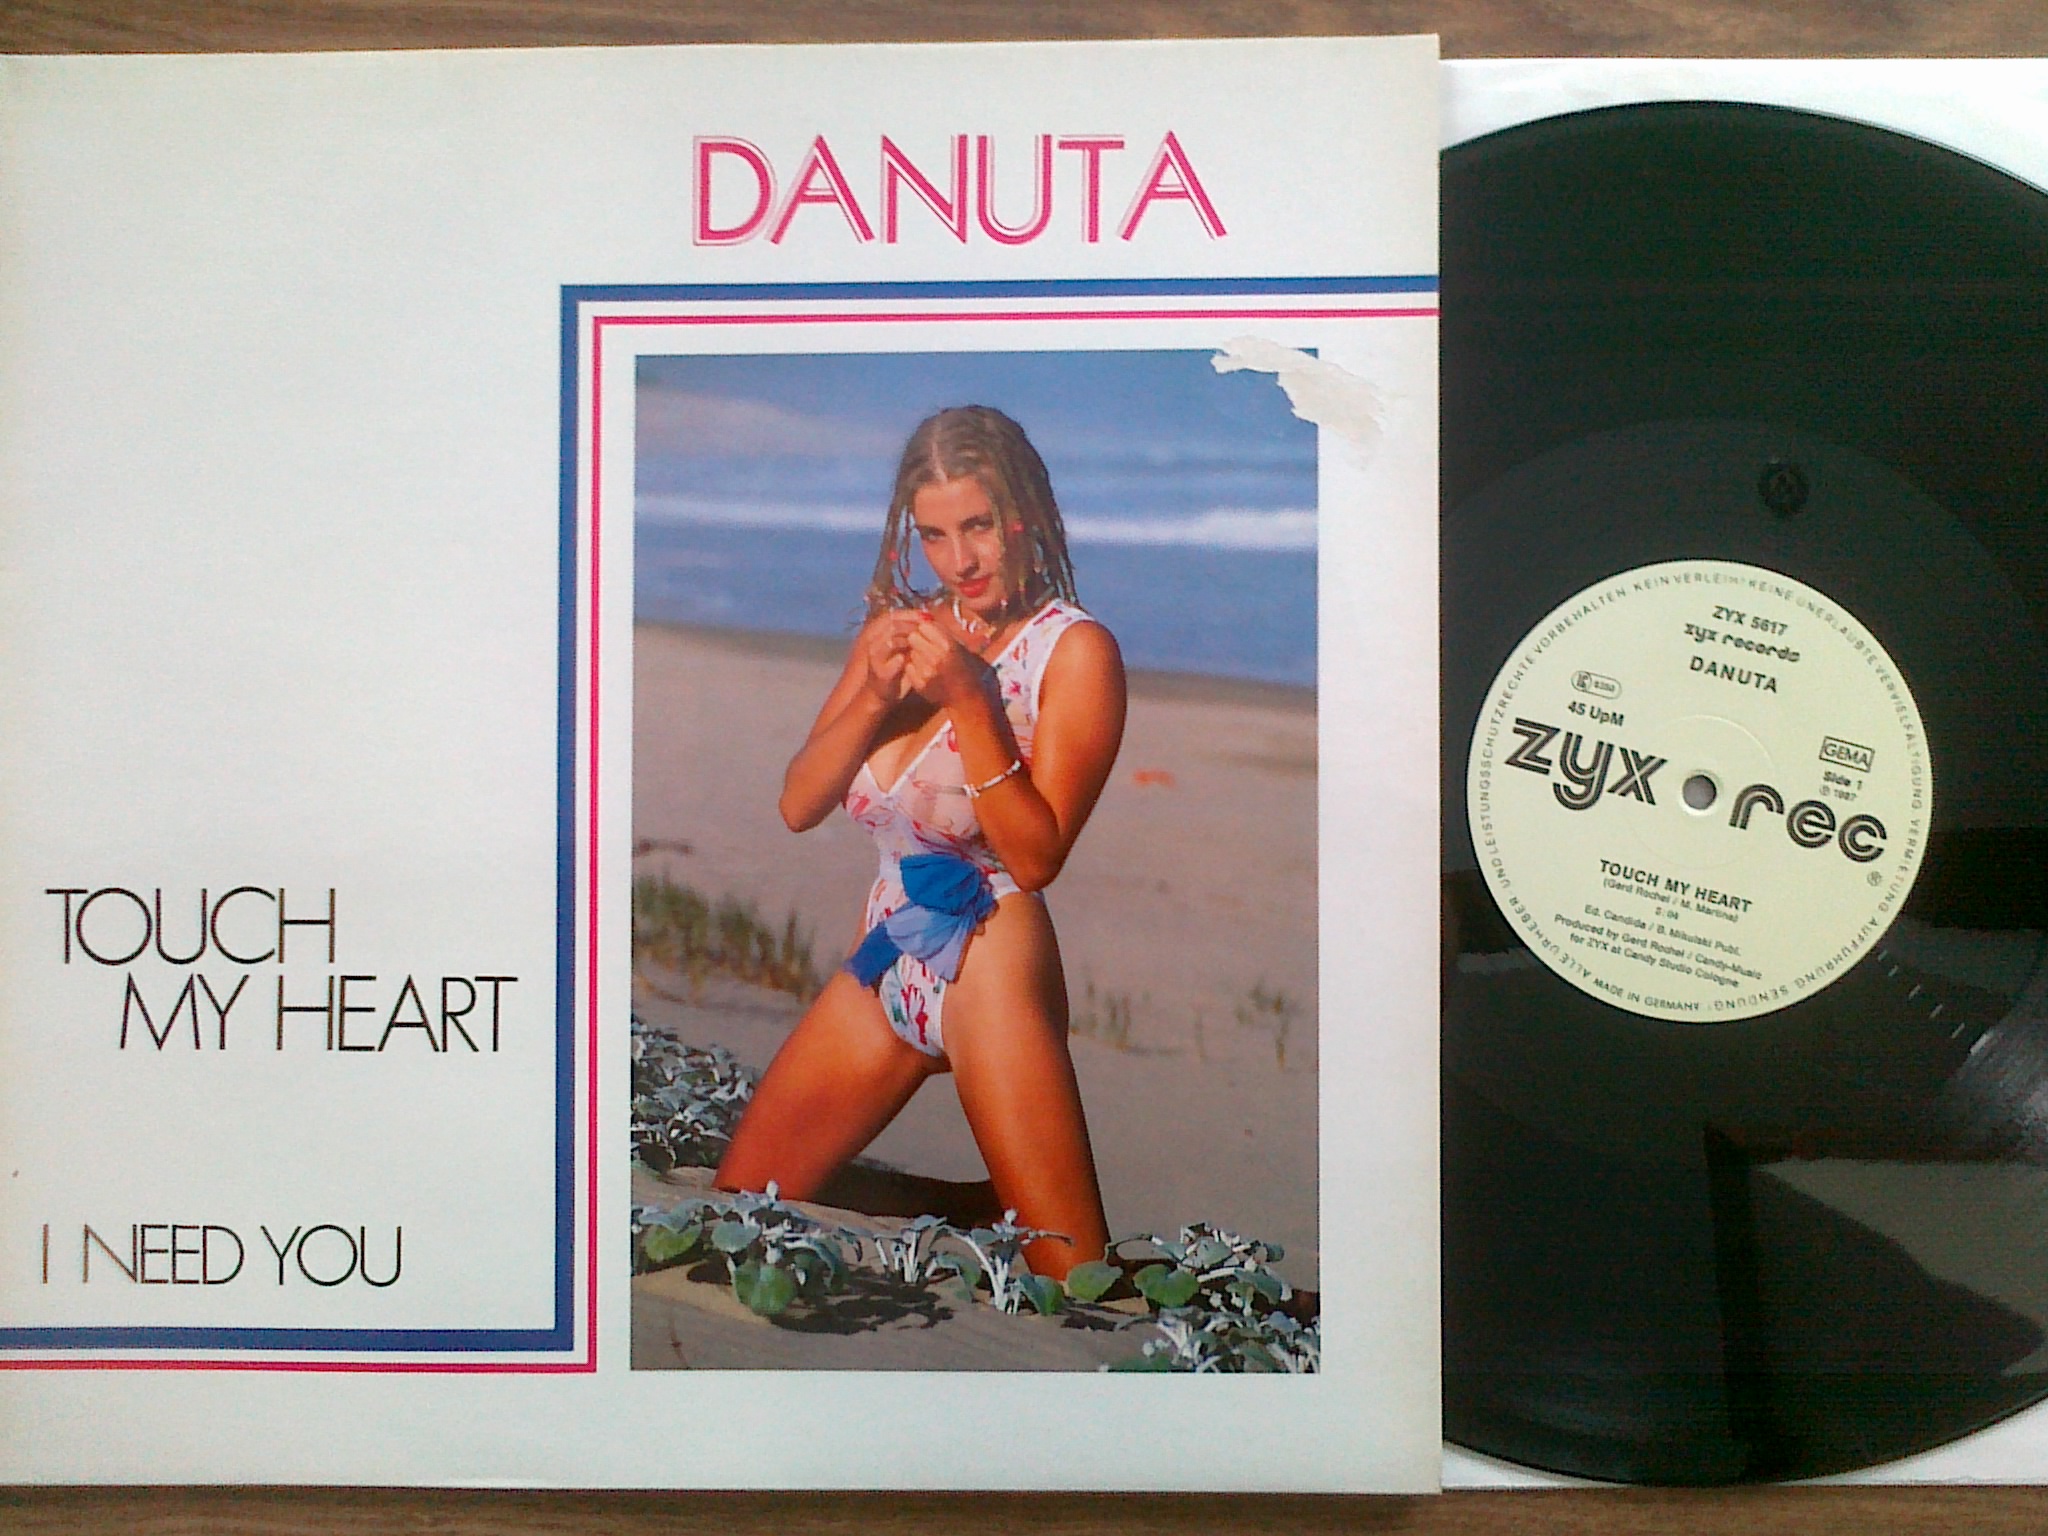 Danuta - Touch my heart